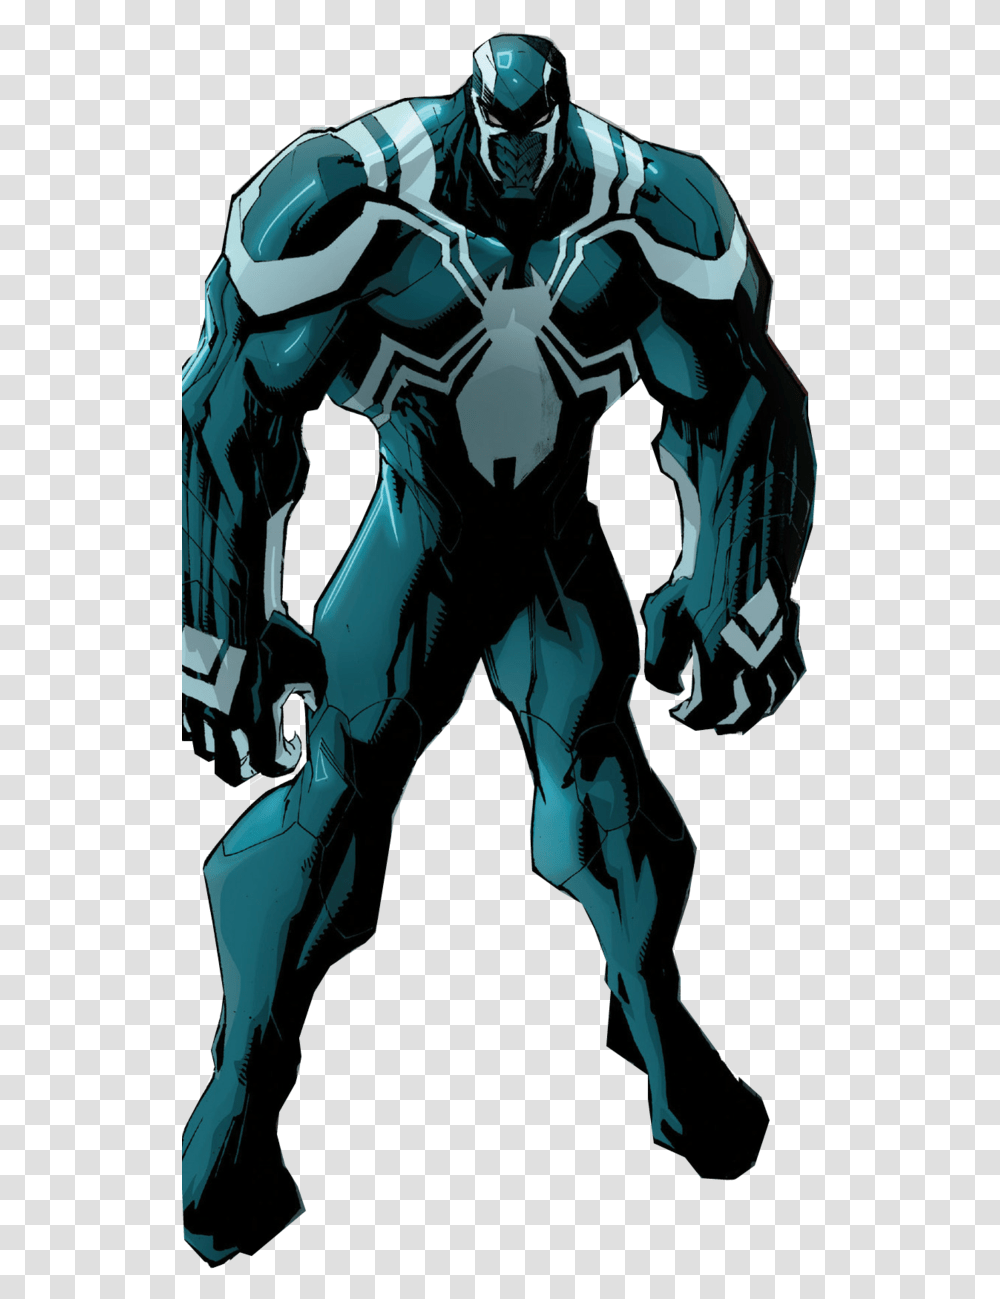 Venom Image Marvel Agent Venom Space Knight, Batman, Helmet, Clothing, Apparel Transparent Png